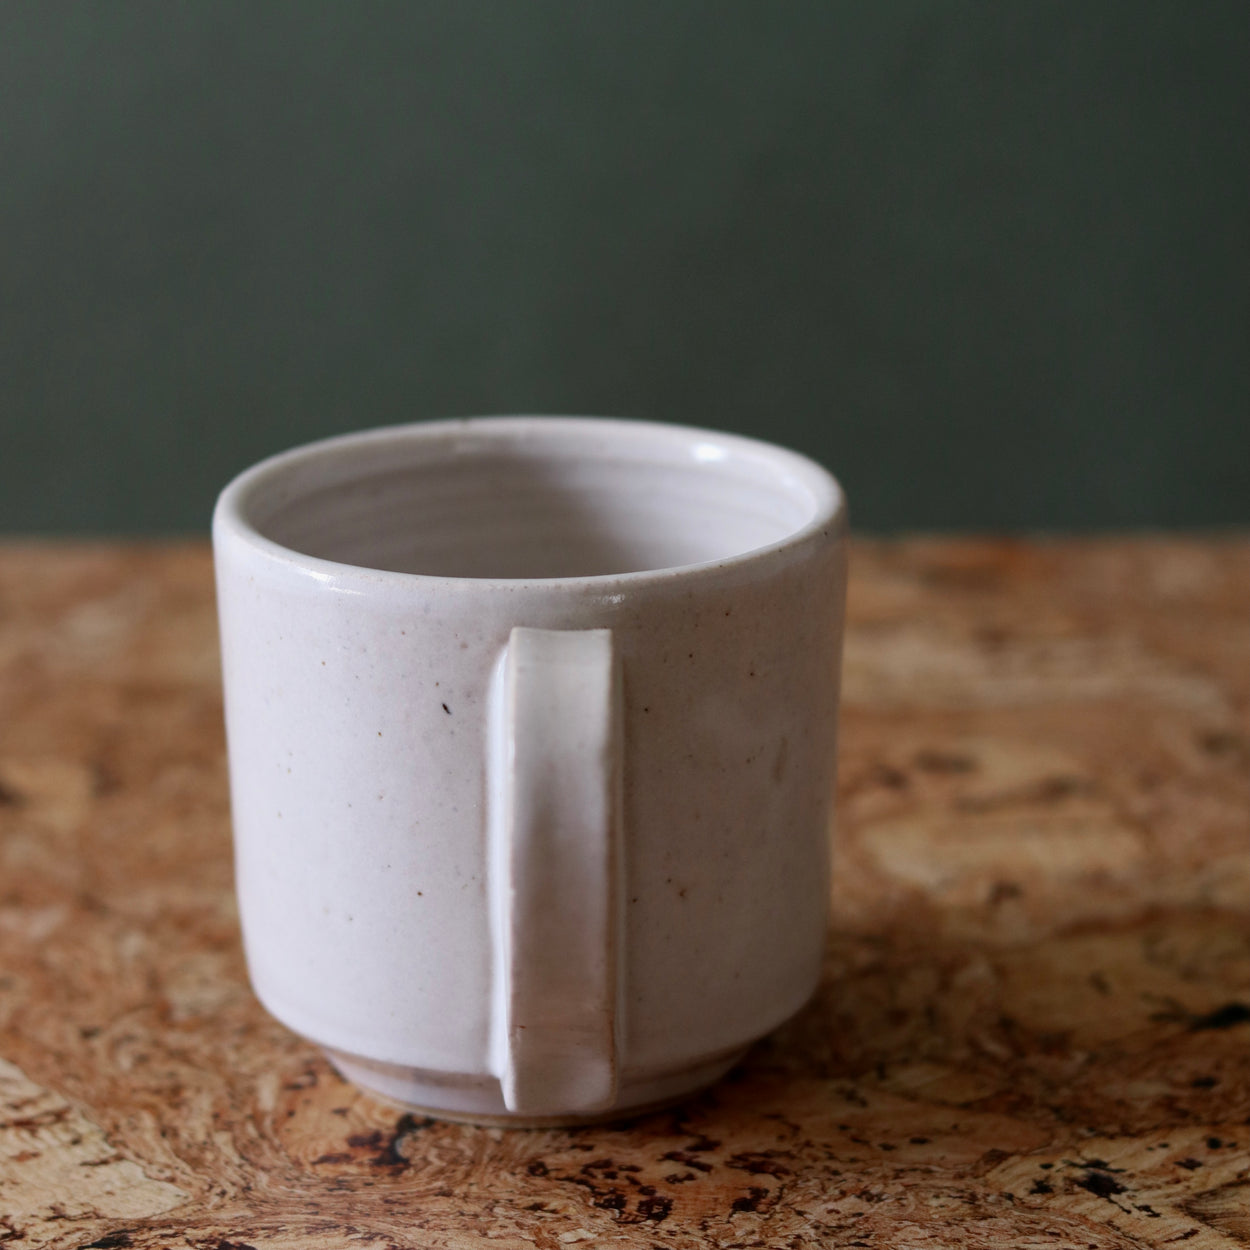 Handmade Ceramic Coffee Mug - Large by Richard Beauchamp, handle view, on cork background.